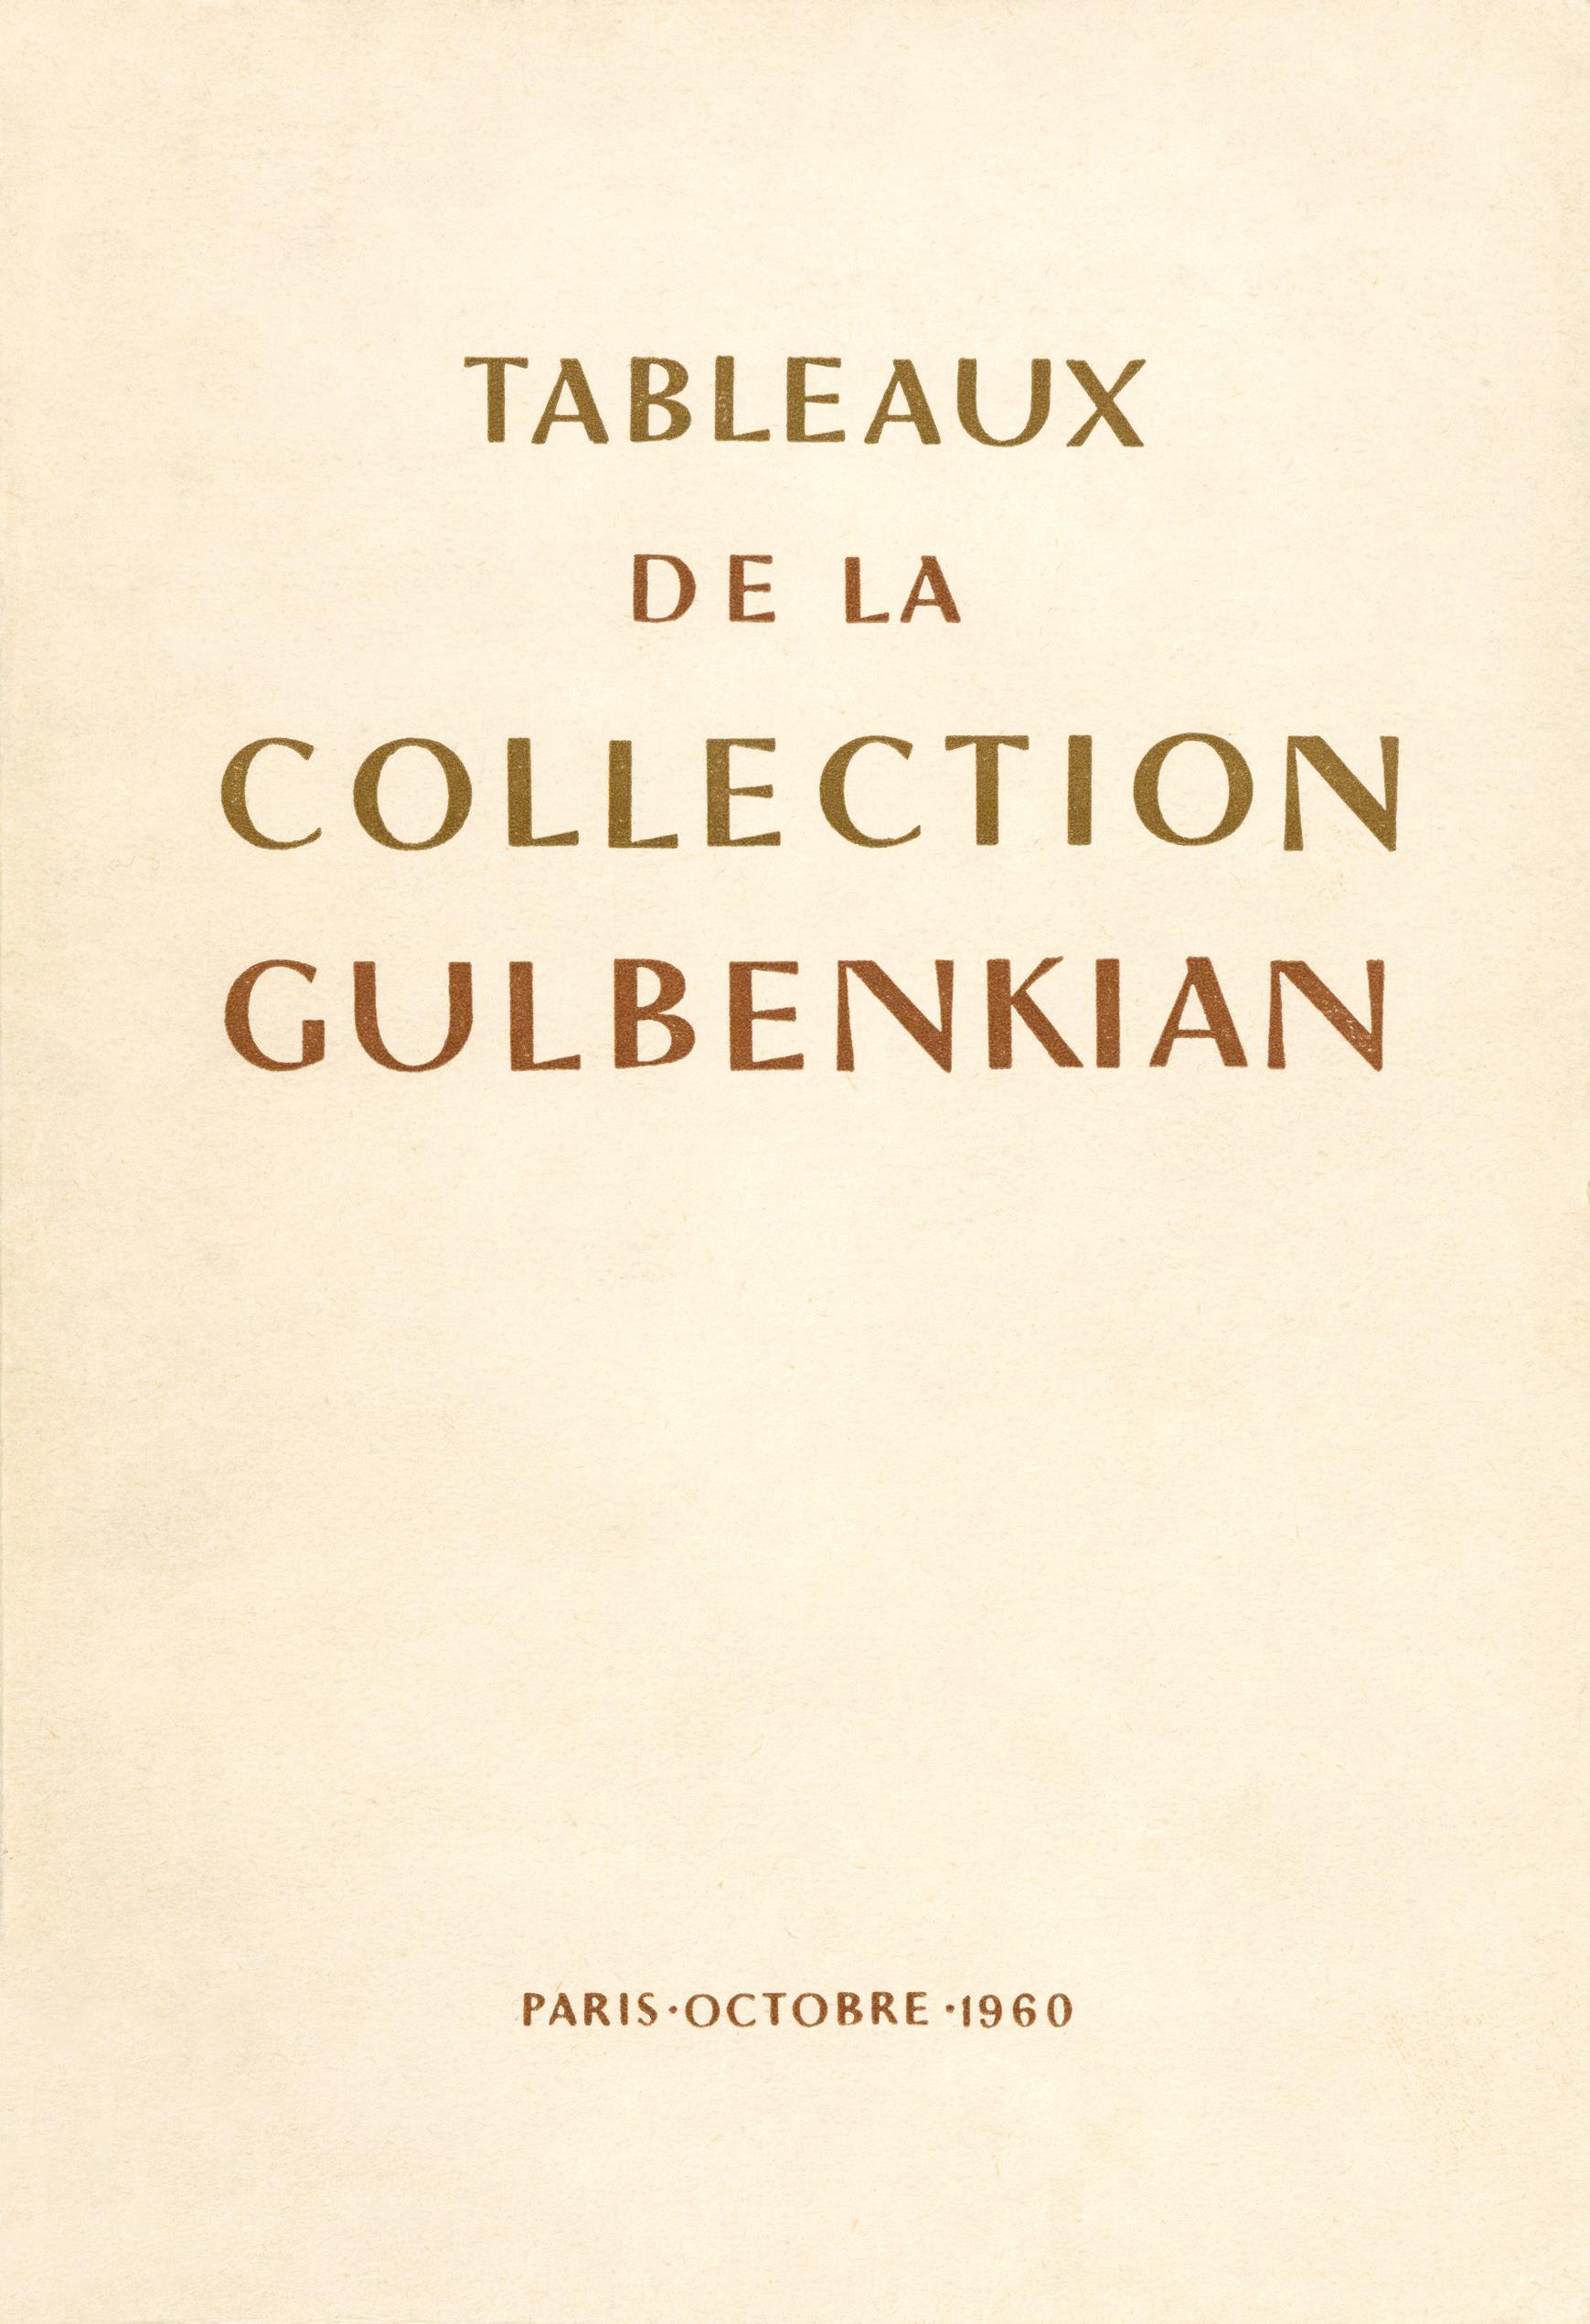 Tableaux de la Collection Gulbenkian